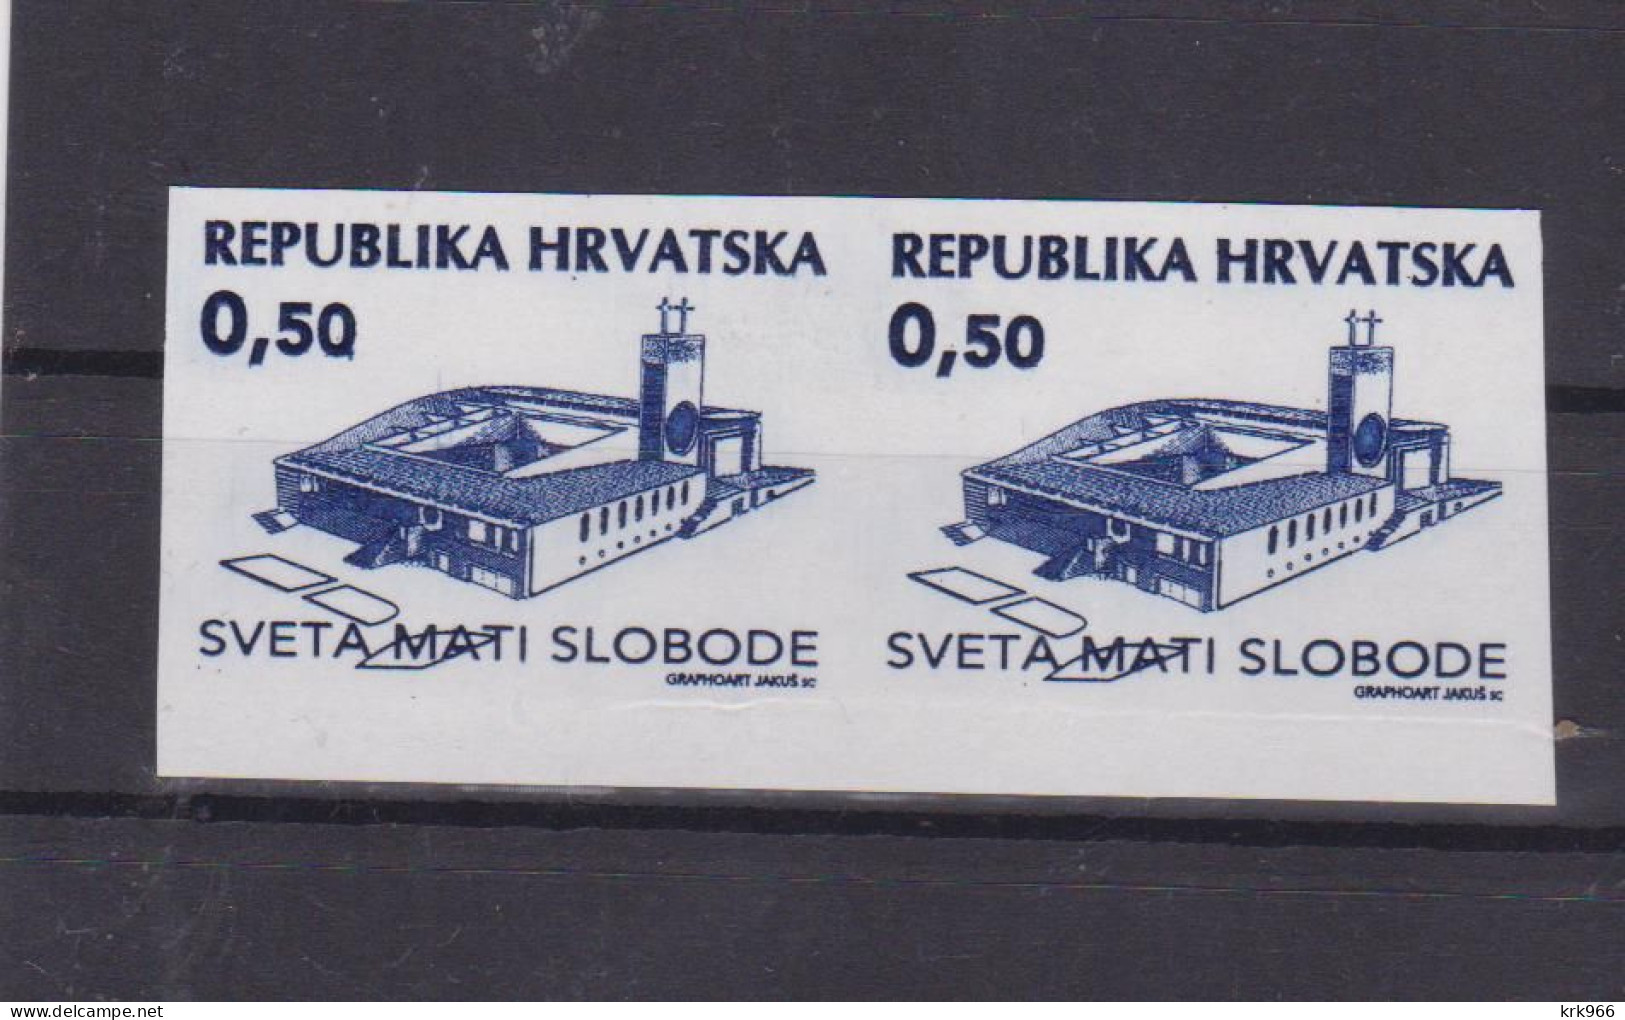 CROATIA.1995 SVETA MATI SLOBODE Charity Stamp,not Issued 0.50 Kn Value Pair  Proof On Paper - Croacia